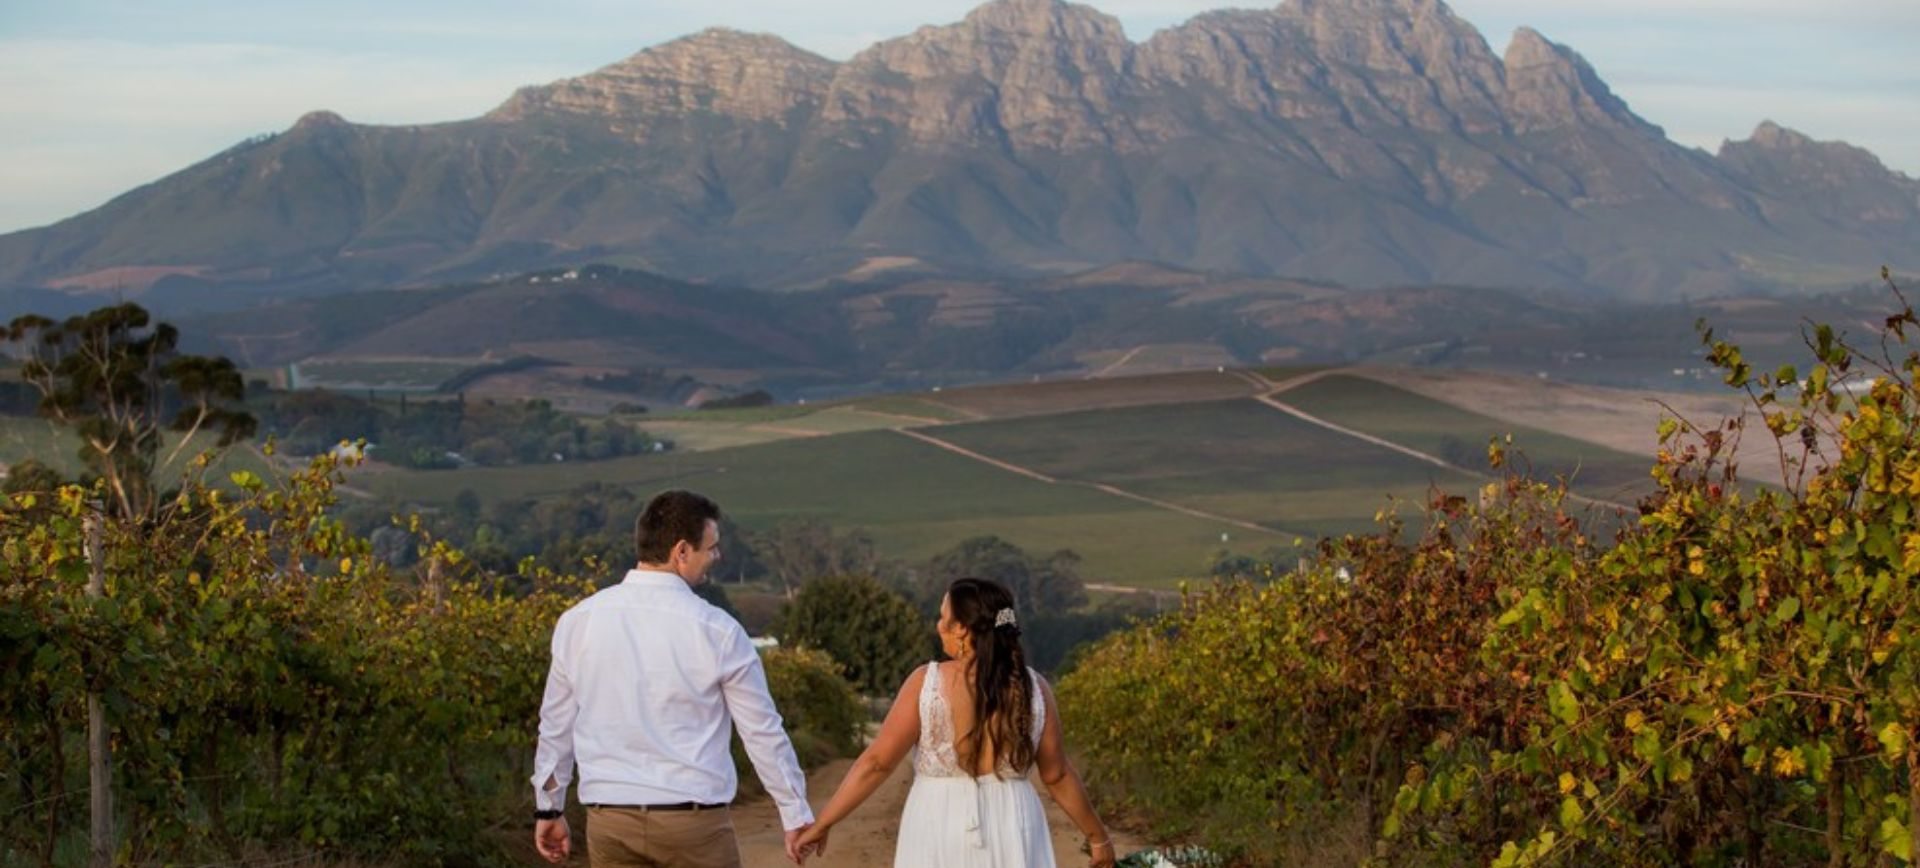 winelands wedding in south africa